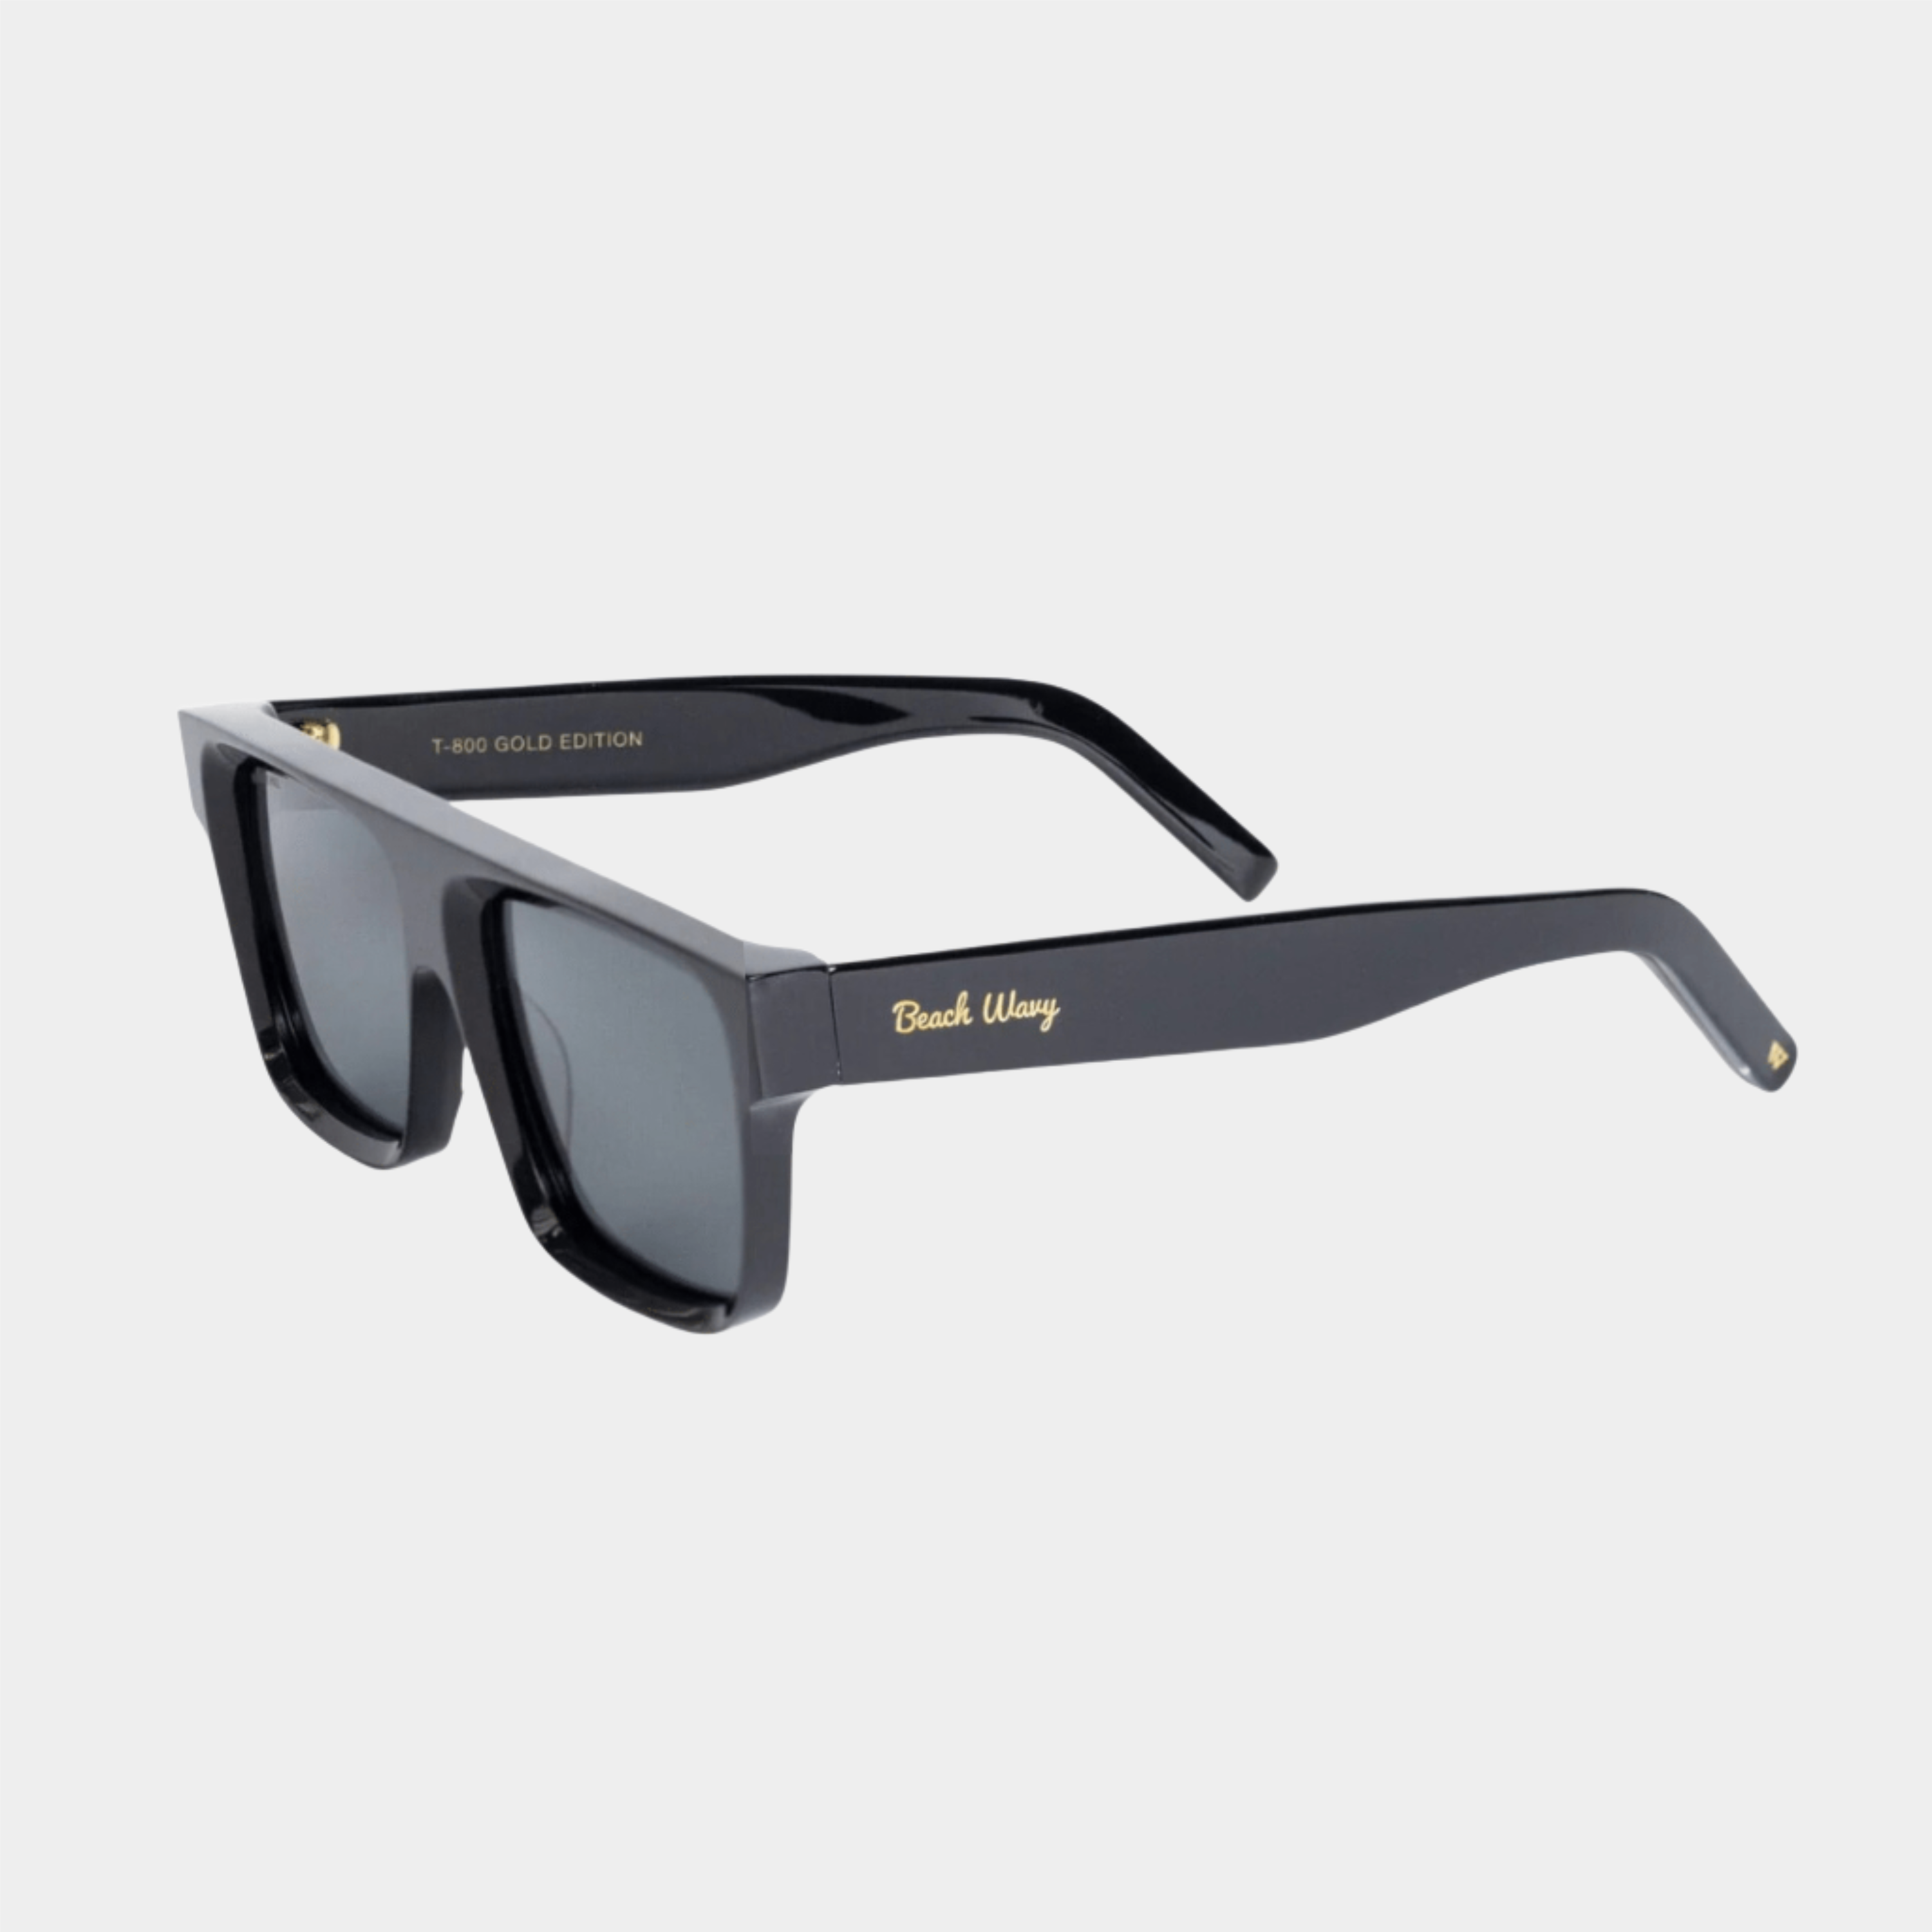 BEACH WAVY Sunglasses Medium/Large / Polarized Cat.3 / Mazzucchelli Acetate BEACH WAVY - T-800 - GOLD EDITION (BLACK)